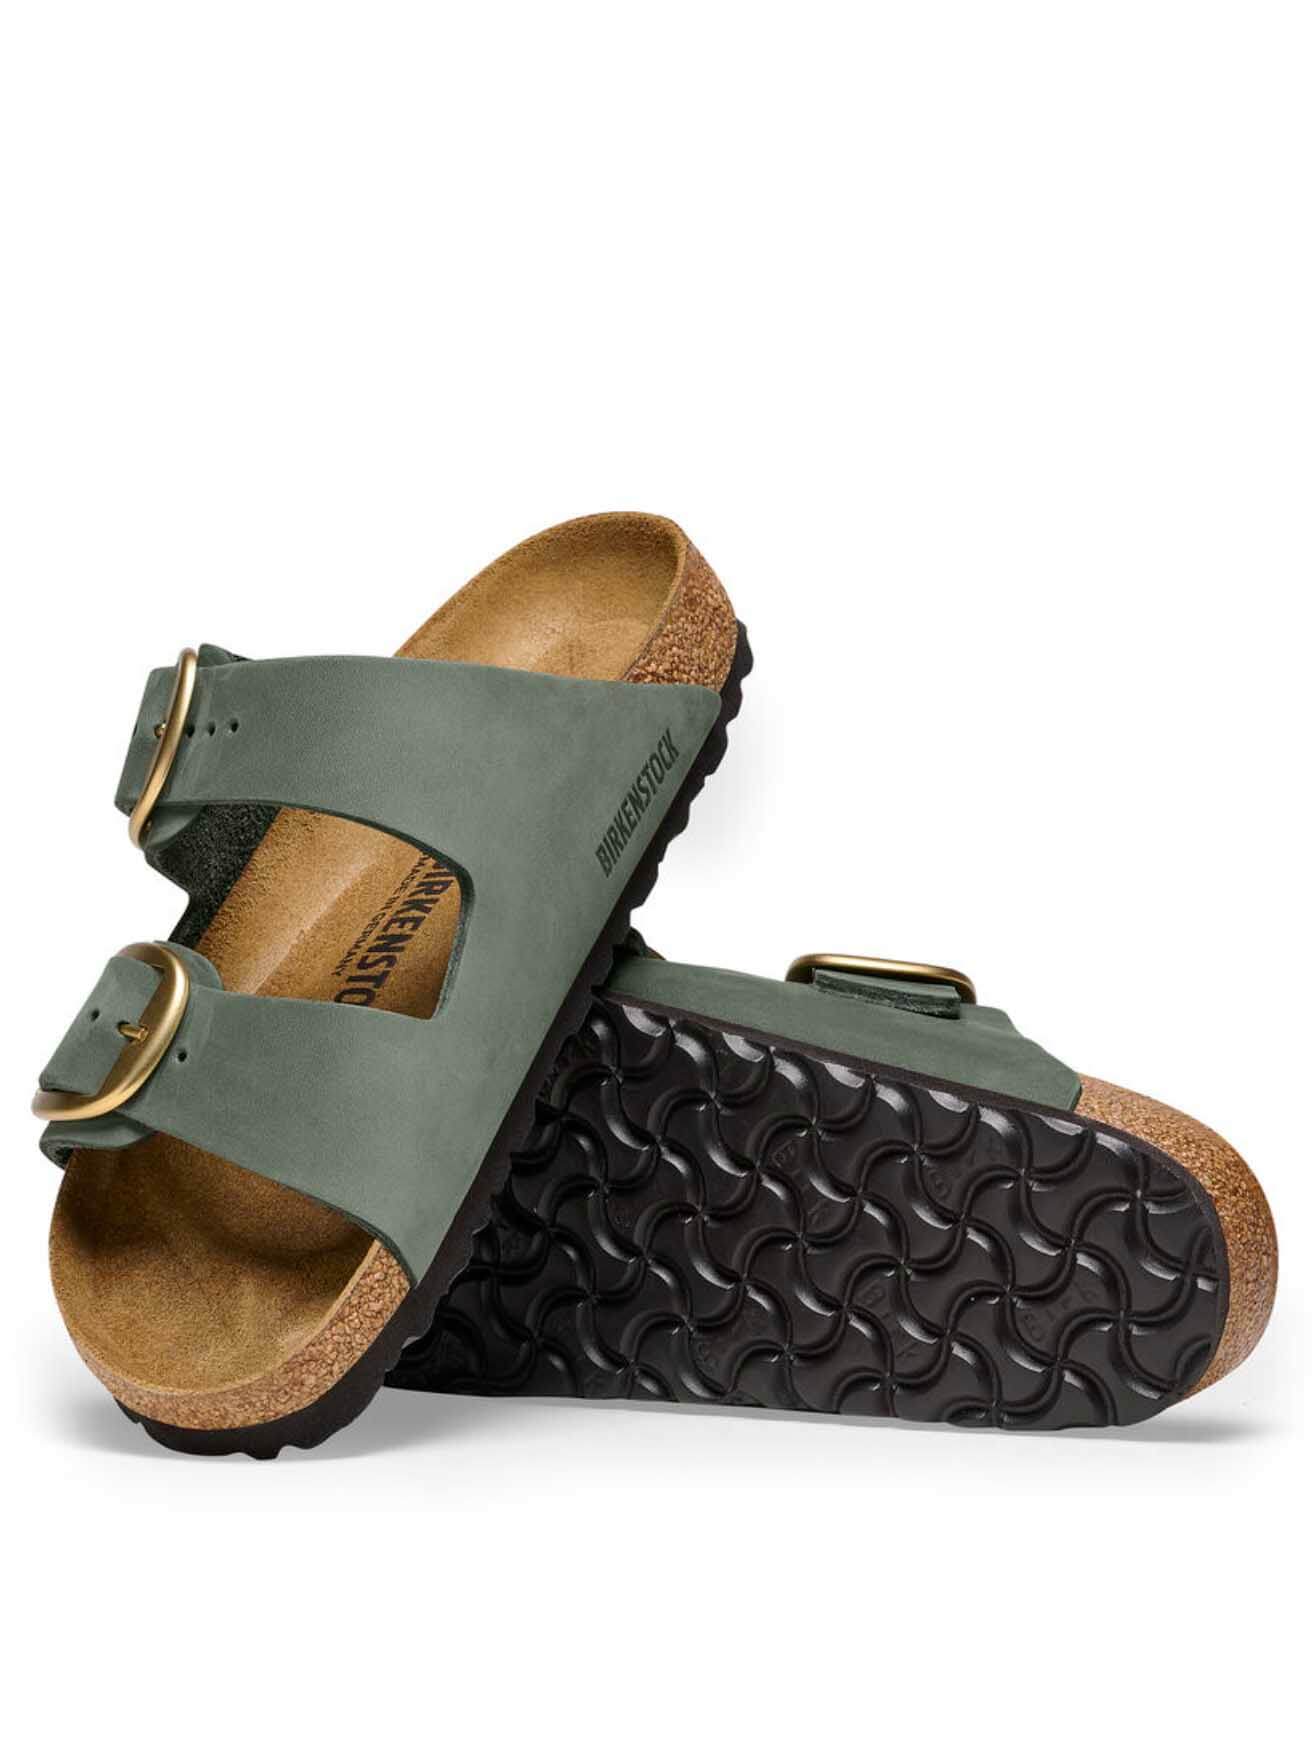 Birkenstock Arizona Big Buckle Sandal in Thyme Oiled Leather